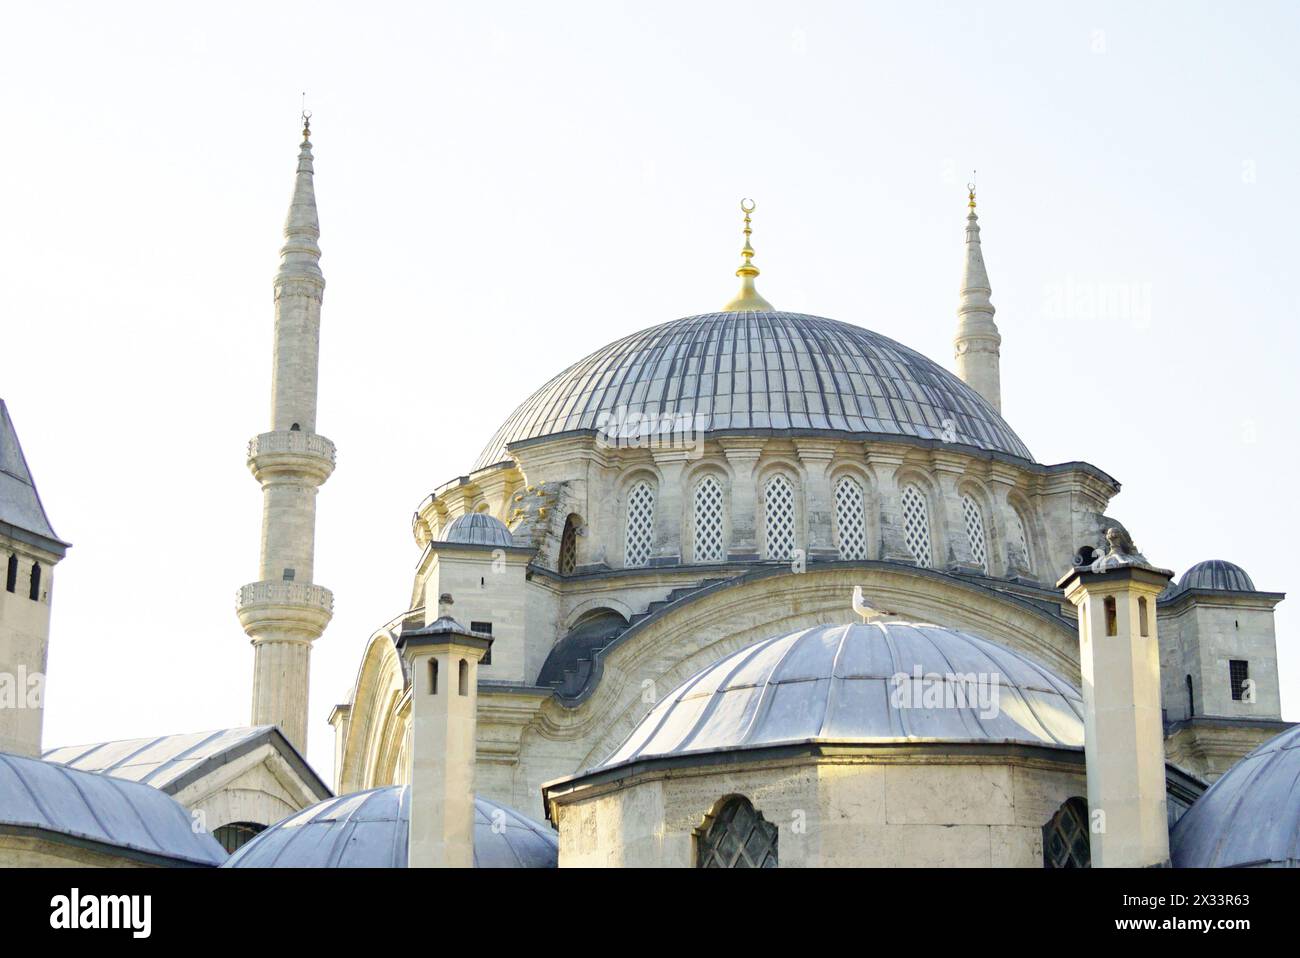 Domes and minarets of the Sultan's Nuruosmaniye Mosque, built near the Grand Bazaar in Istanbul, Turkey Stock Photo